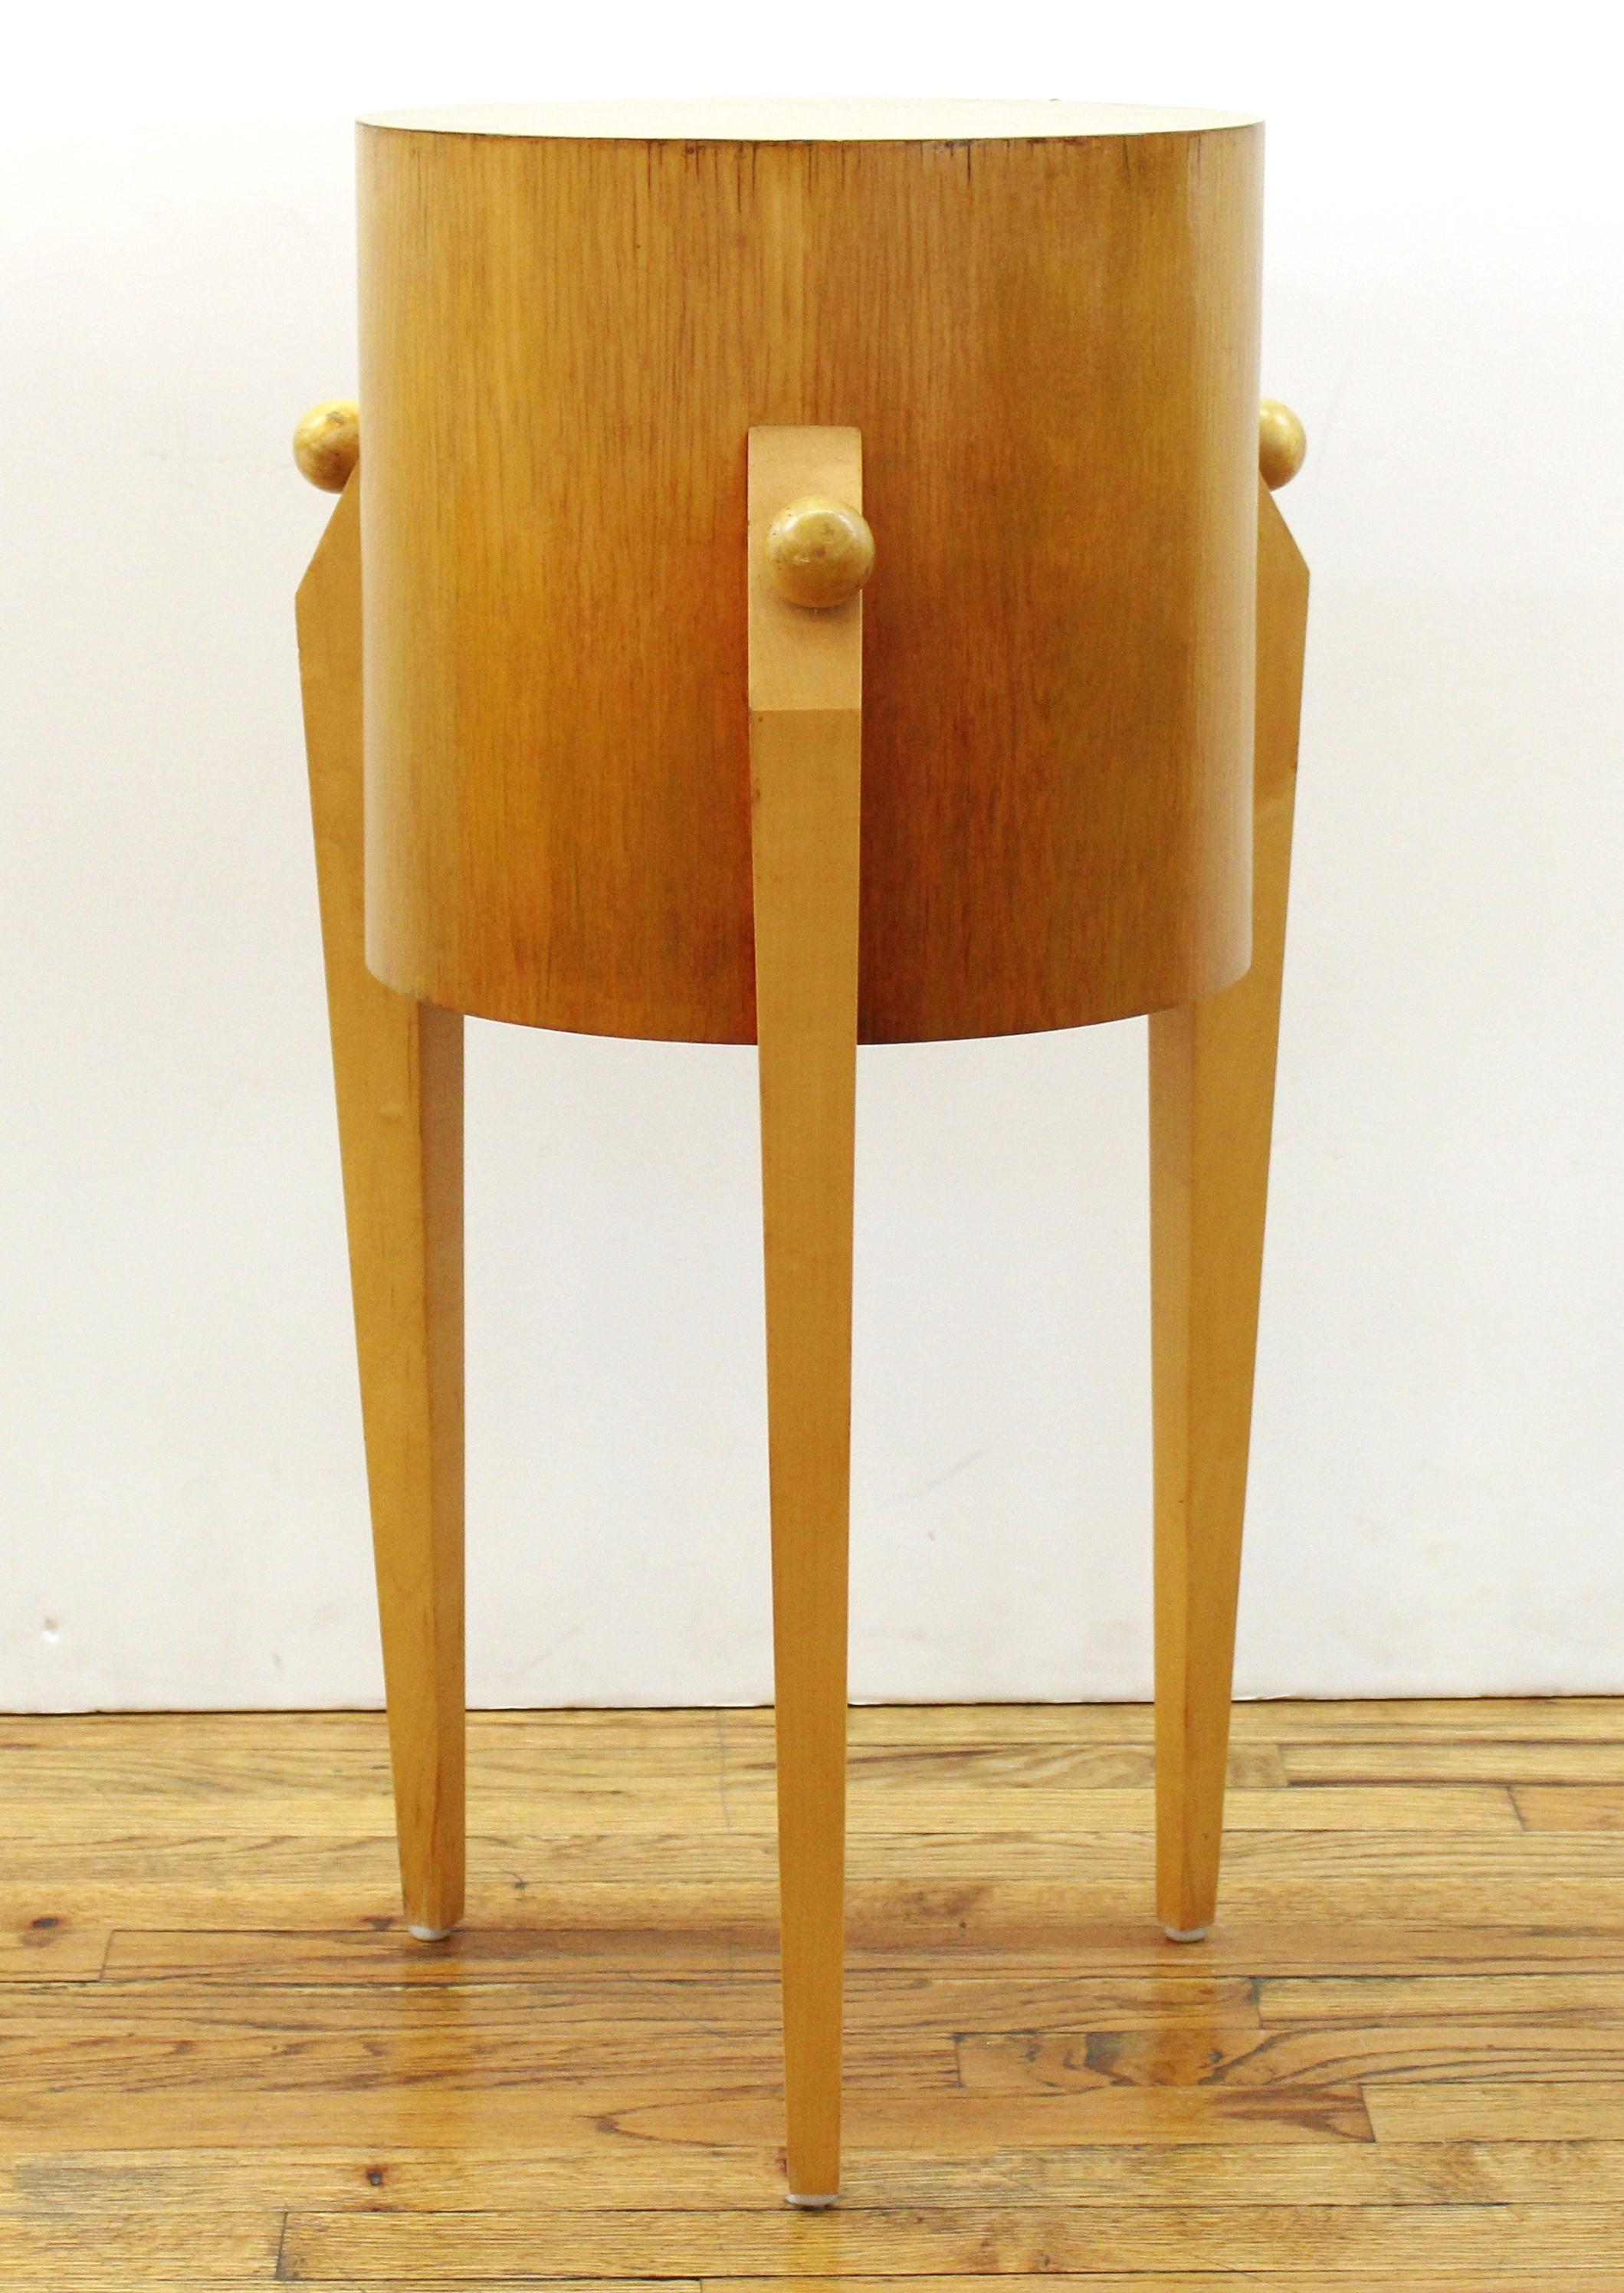 Postmodern Art Deco style tripod display pedestal in wood, unmarked, circa 1990s. Measures: 30.25